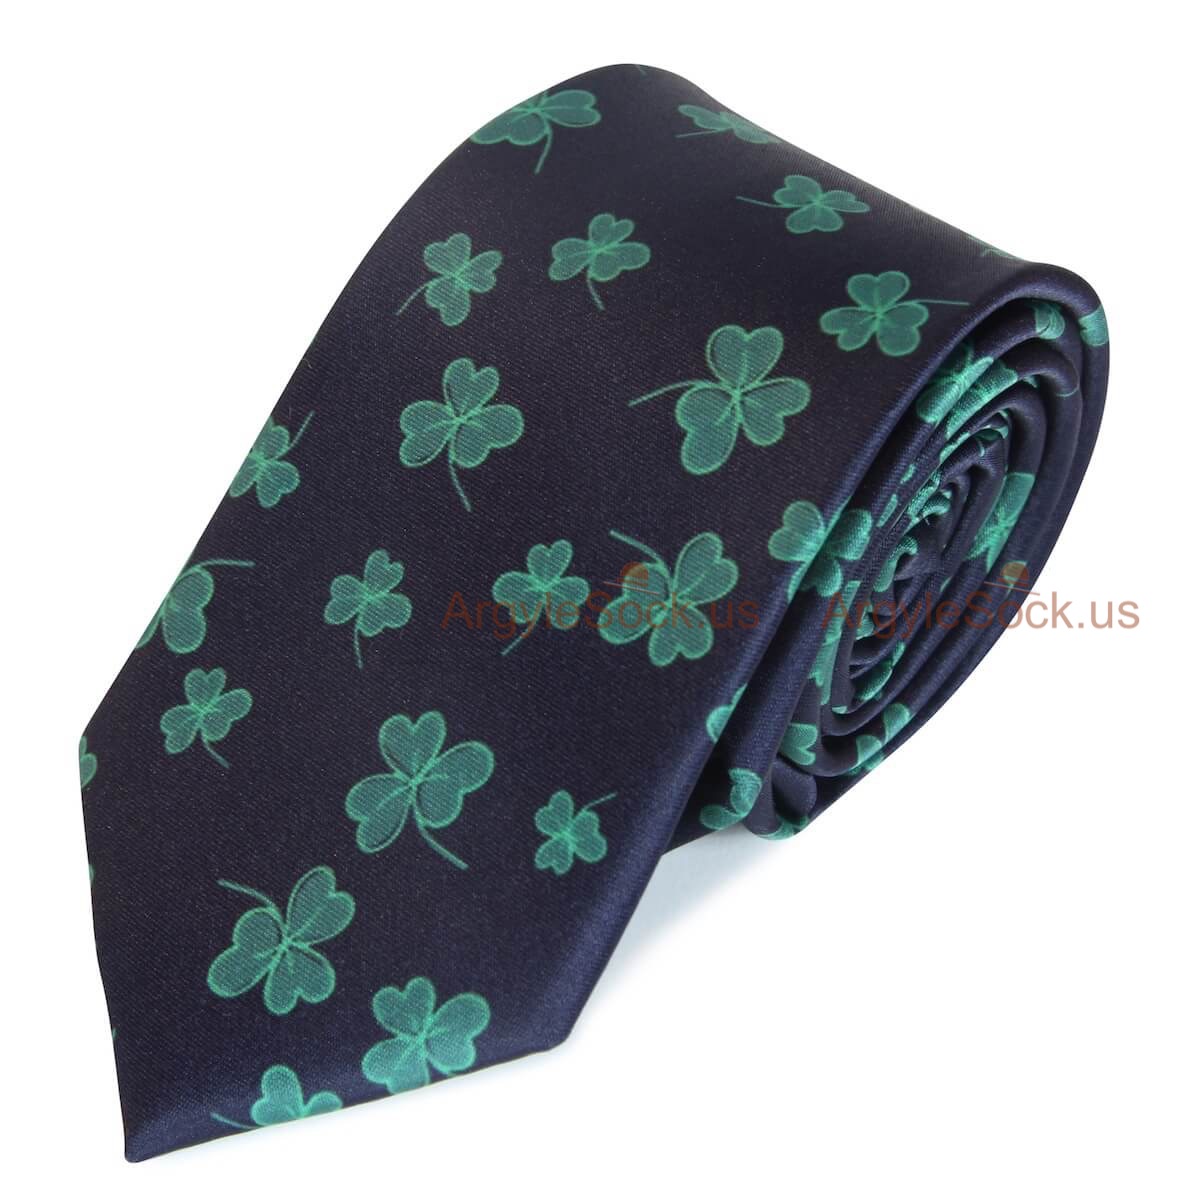 St. Patricks Day Irish Theme Groomsmen/Costume Necktie